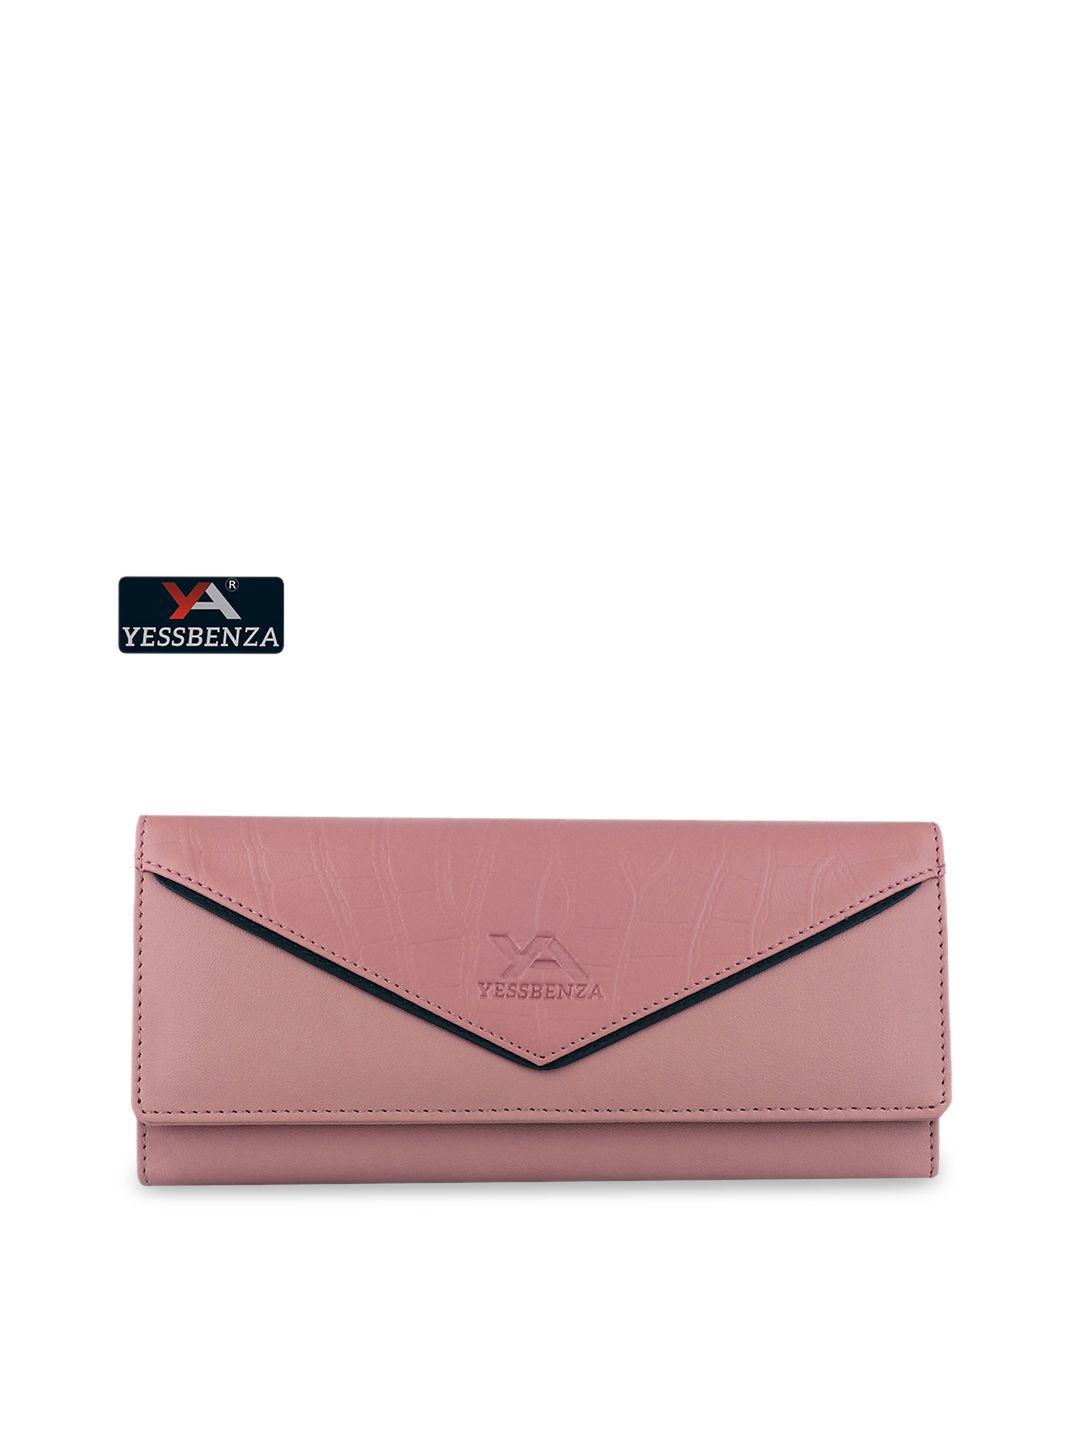 yessbenza women peach-coloured envelope clutch